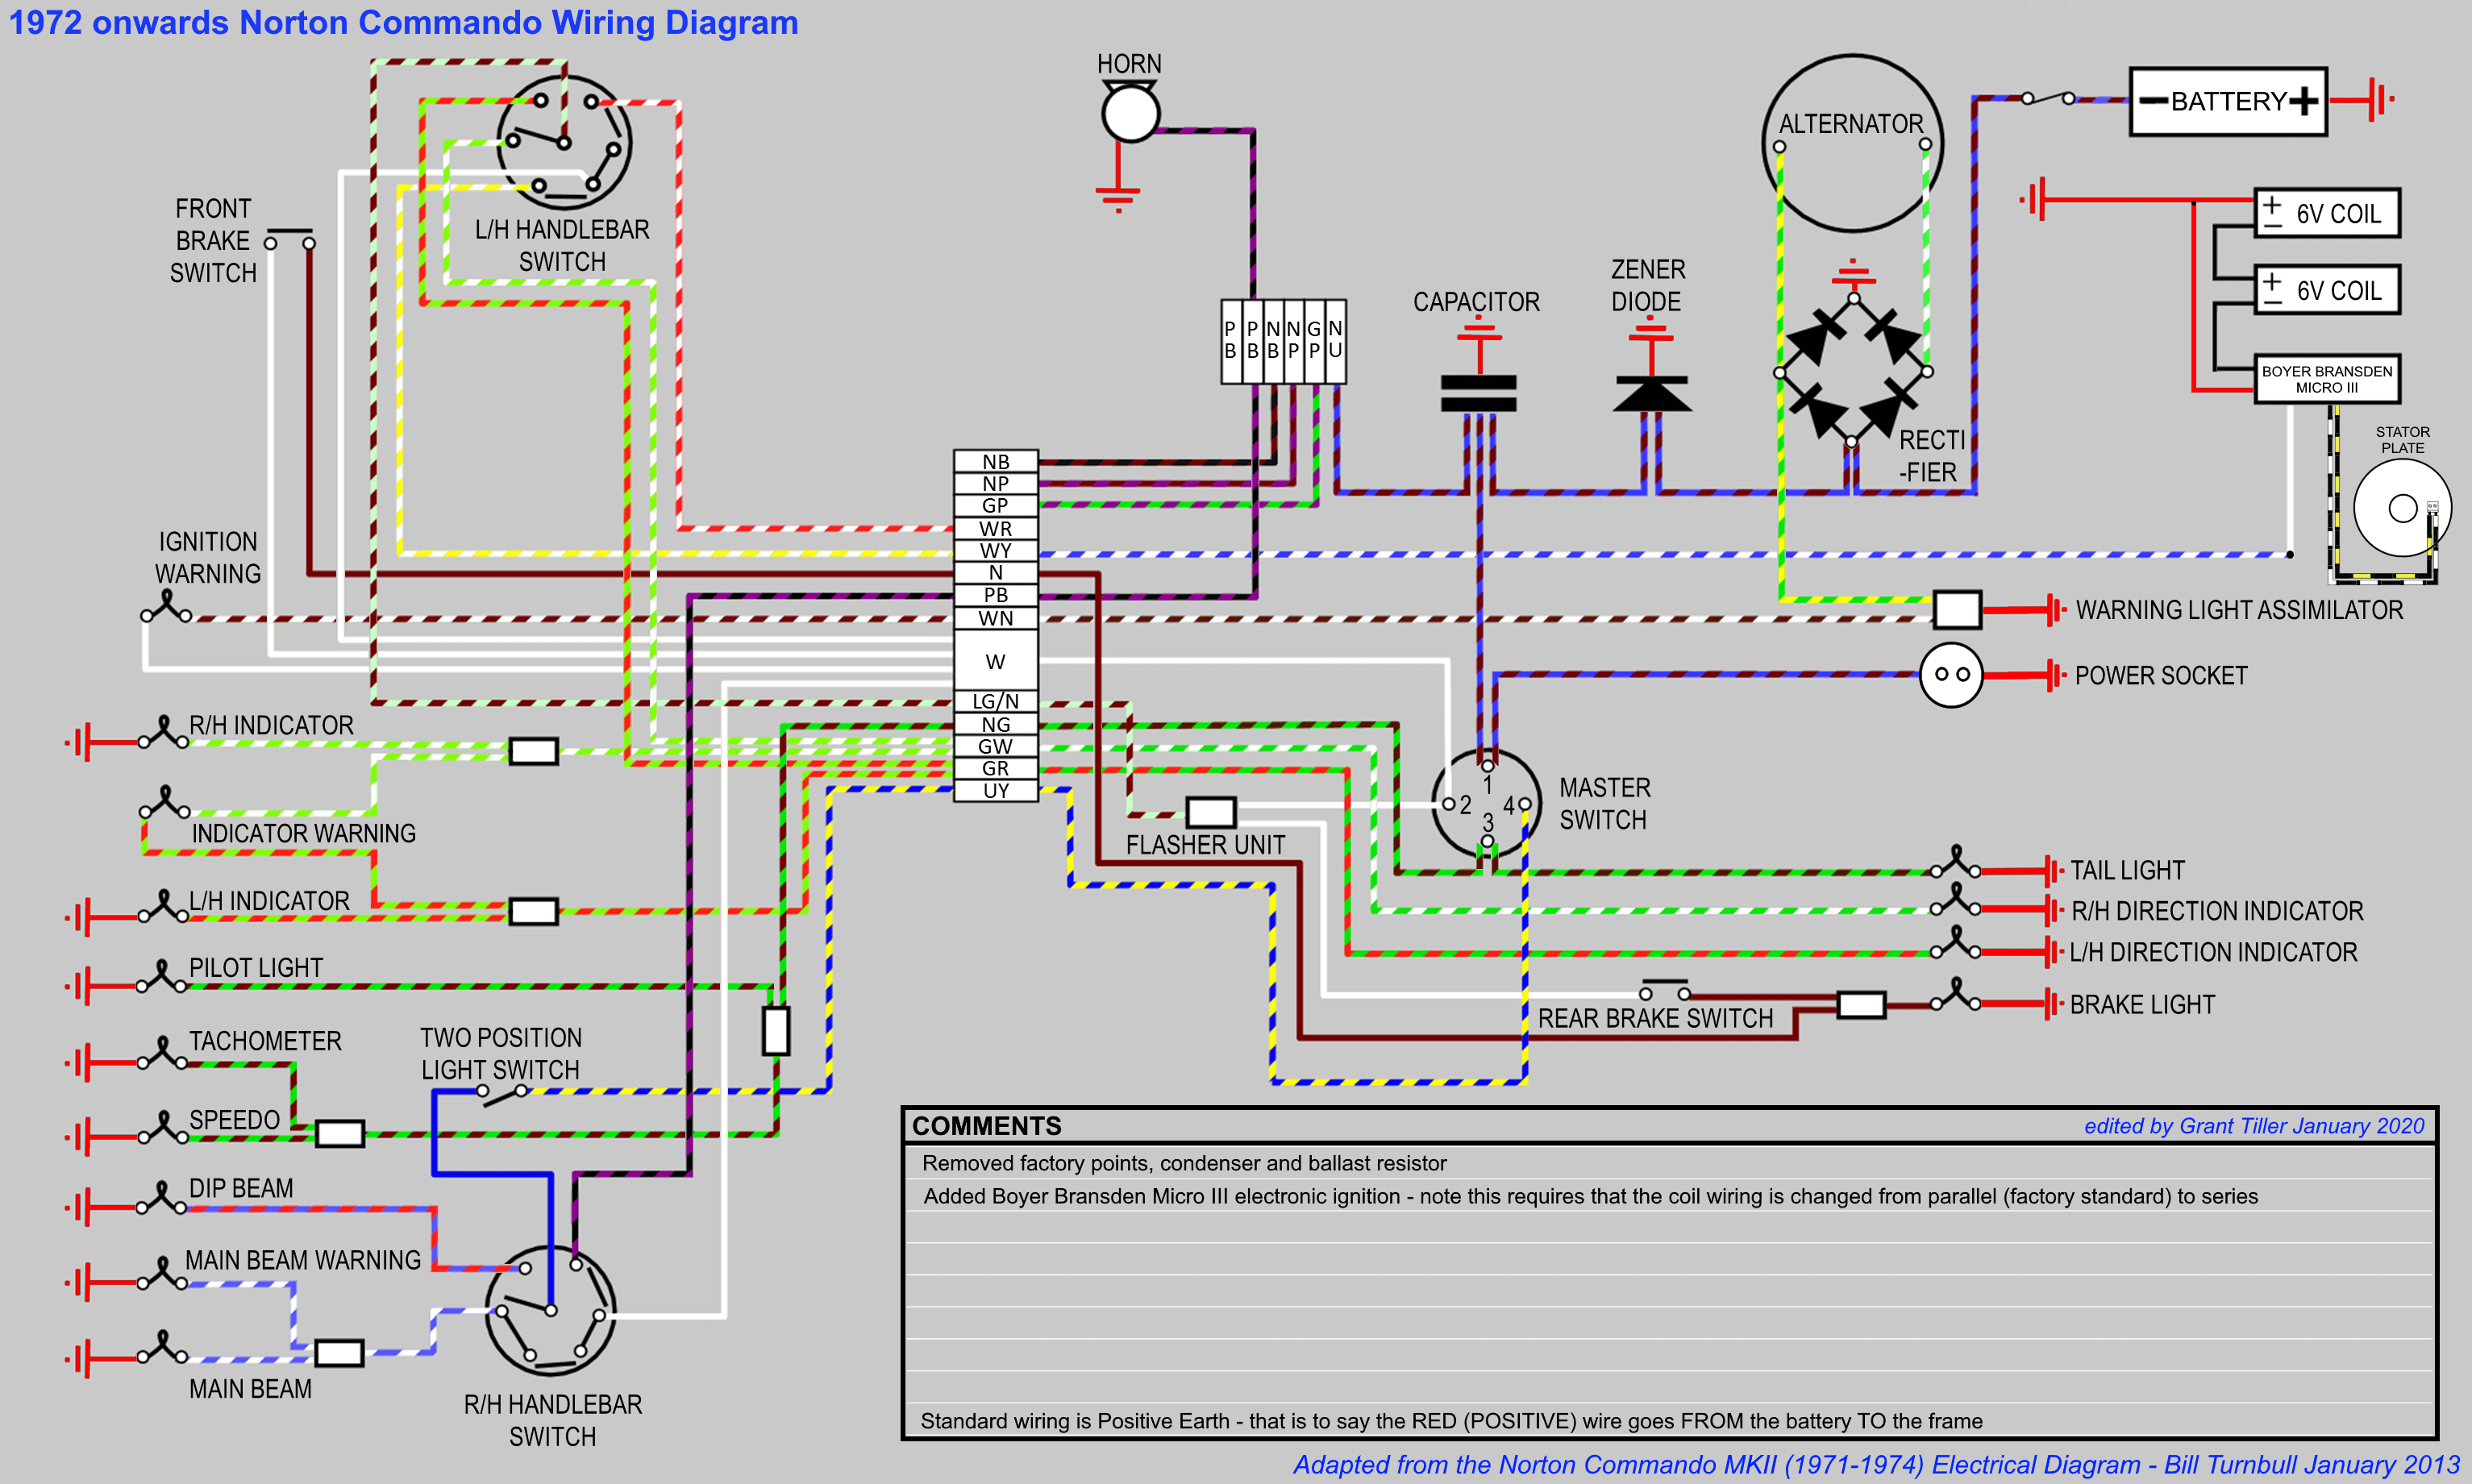 Norton Commando Wiring Diagram + Boyer Electrical Circuit Wiring Diagram Grant Tiller